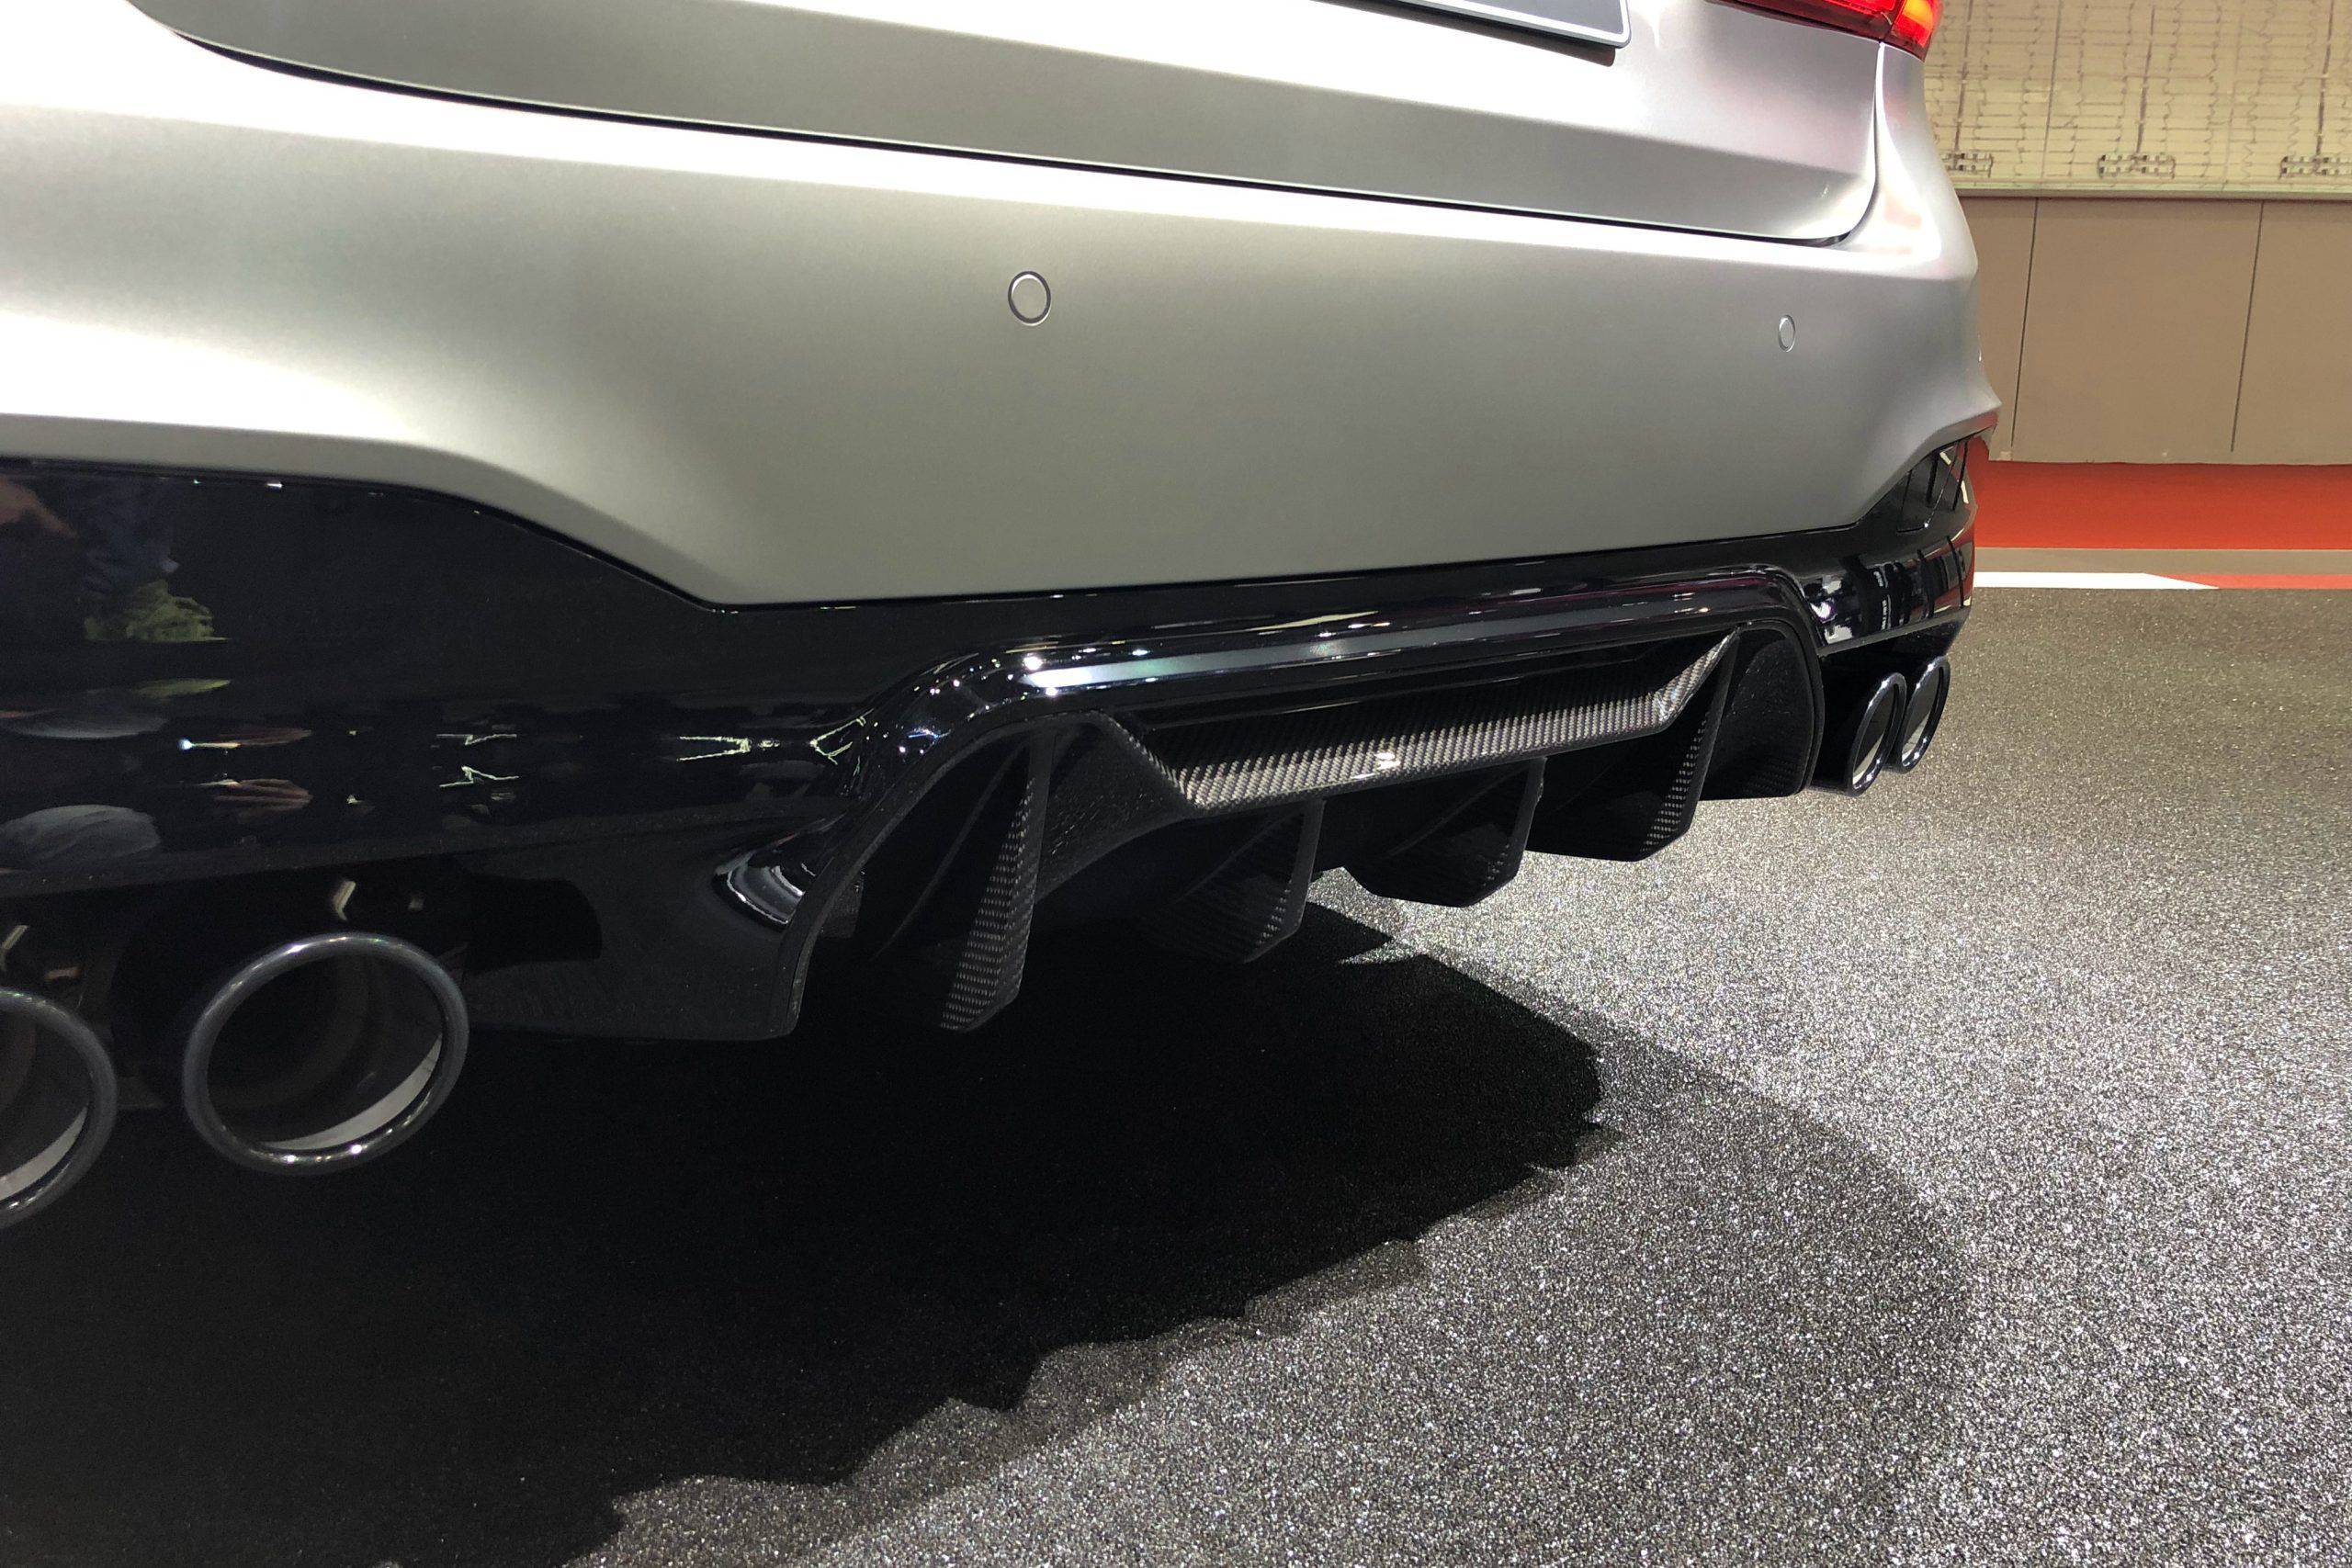 2018-2023 BMW F90 M5 MP Style Carbon Fiber Rear Diffuser - Carbonado Aero